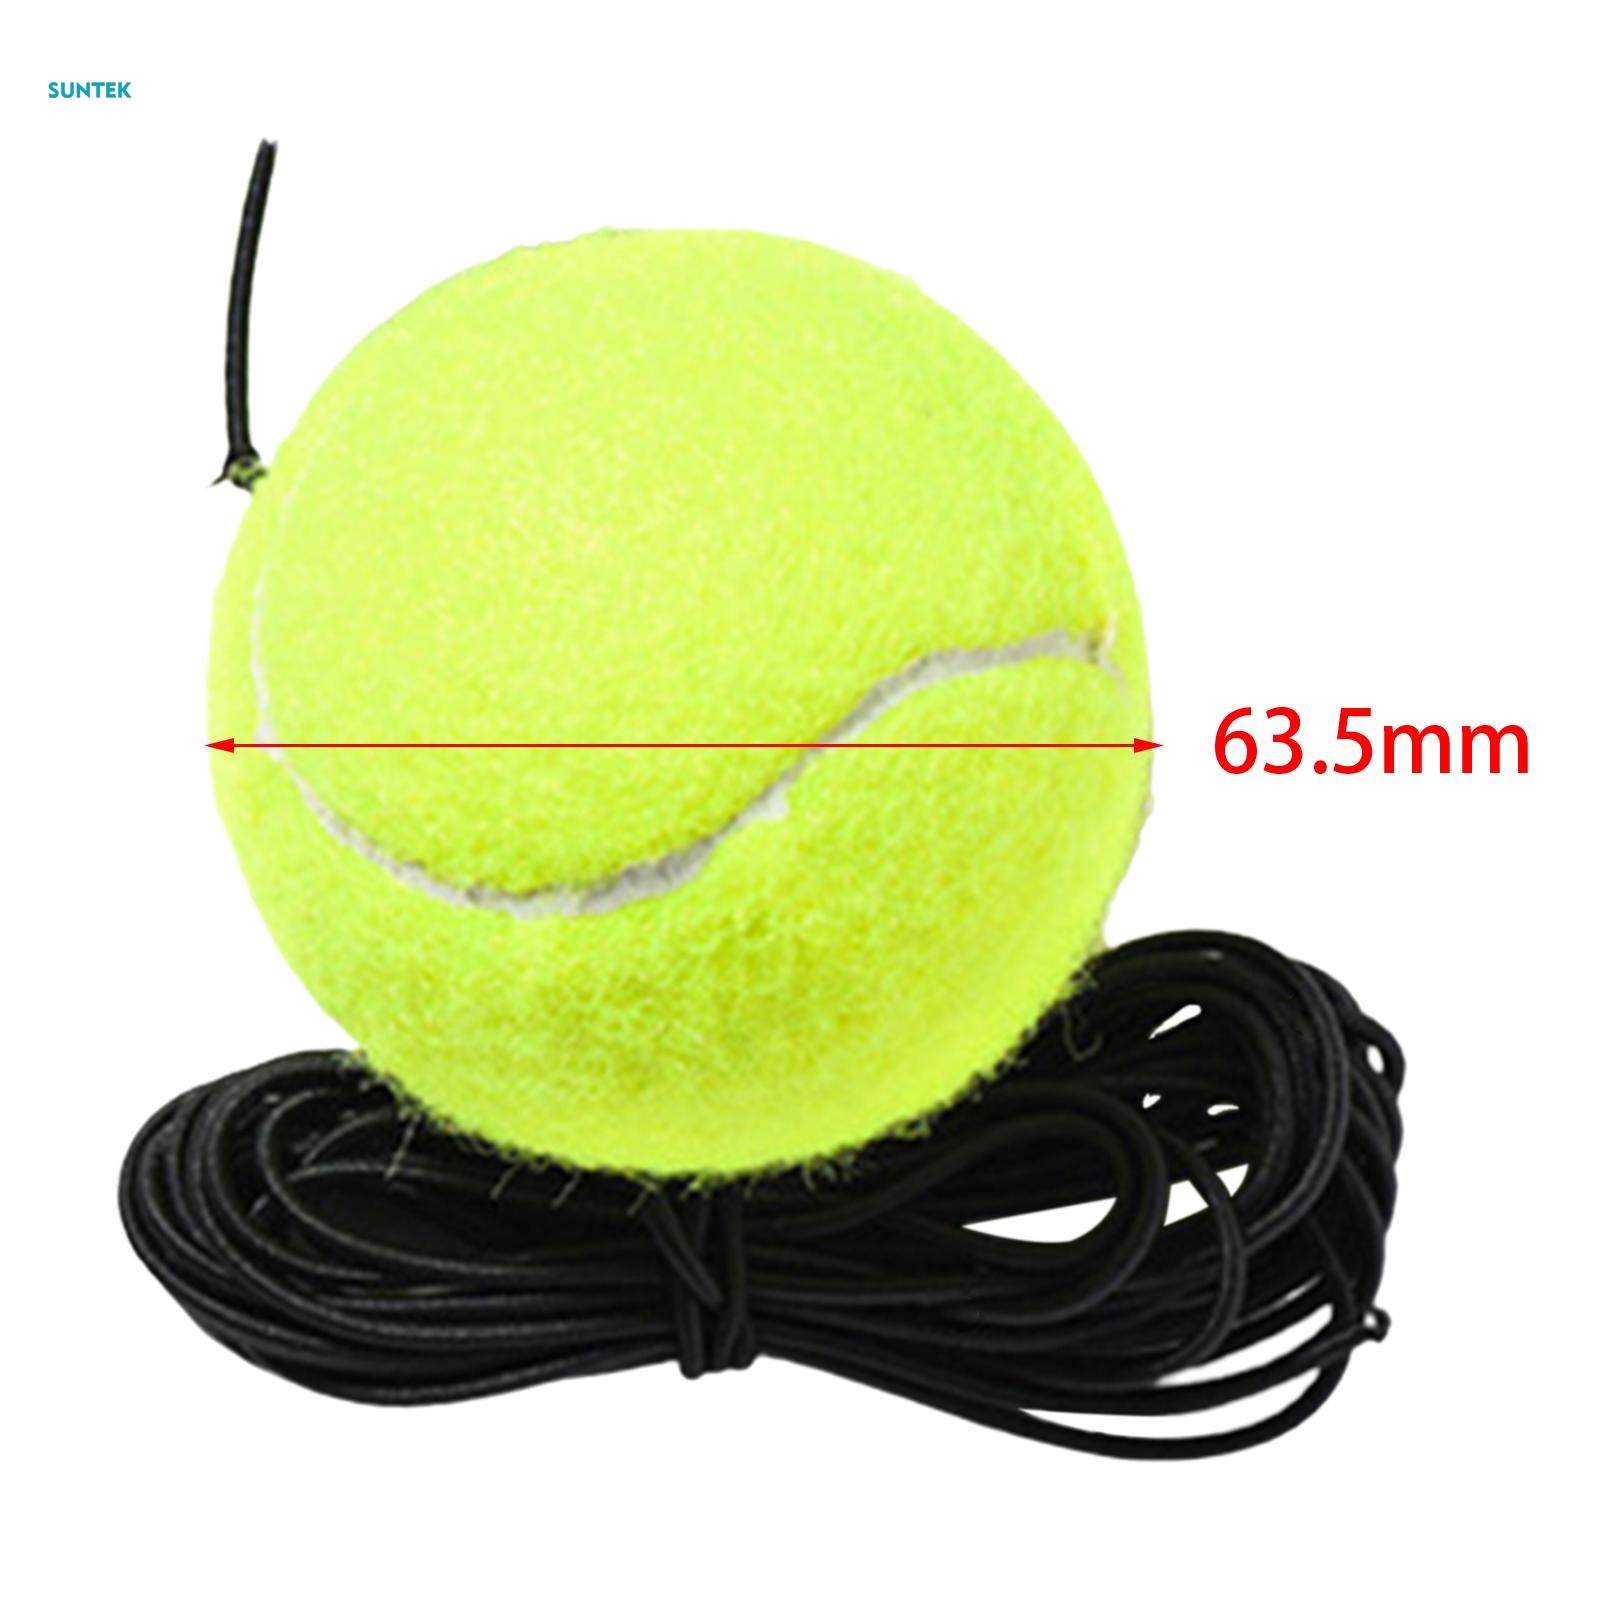 Buy STERUN Tennis Balls with Storage Bag – Thick-Walled Tennis